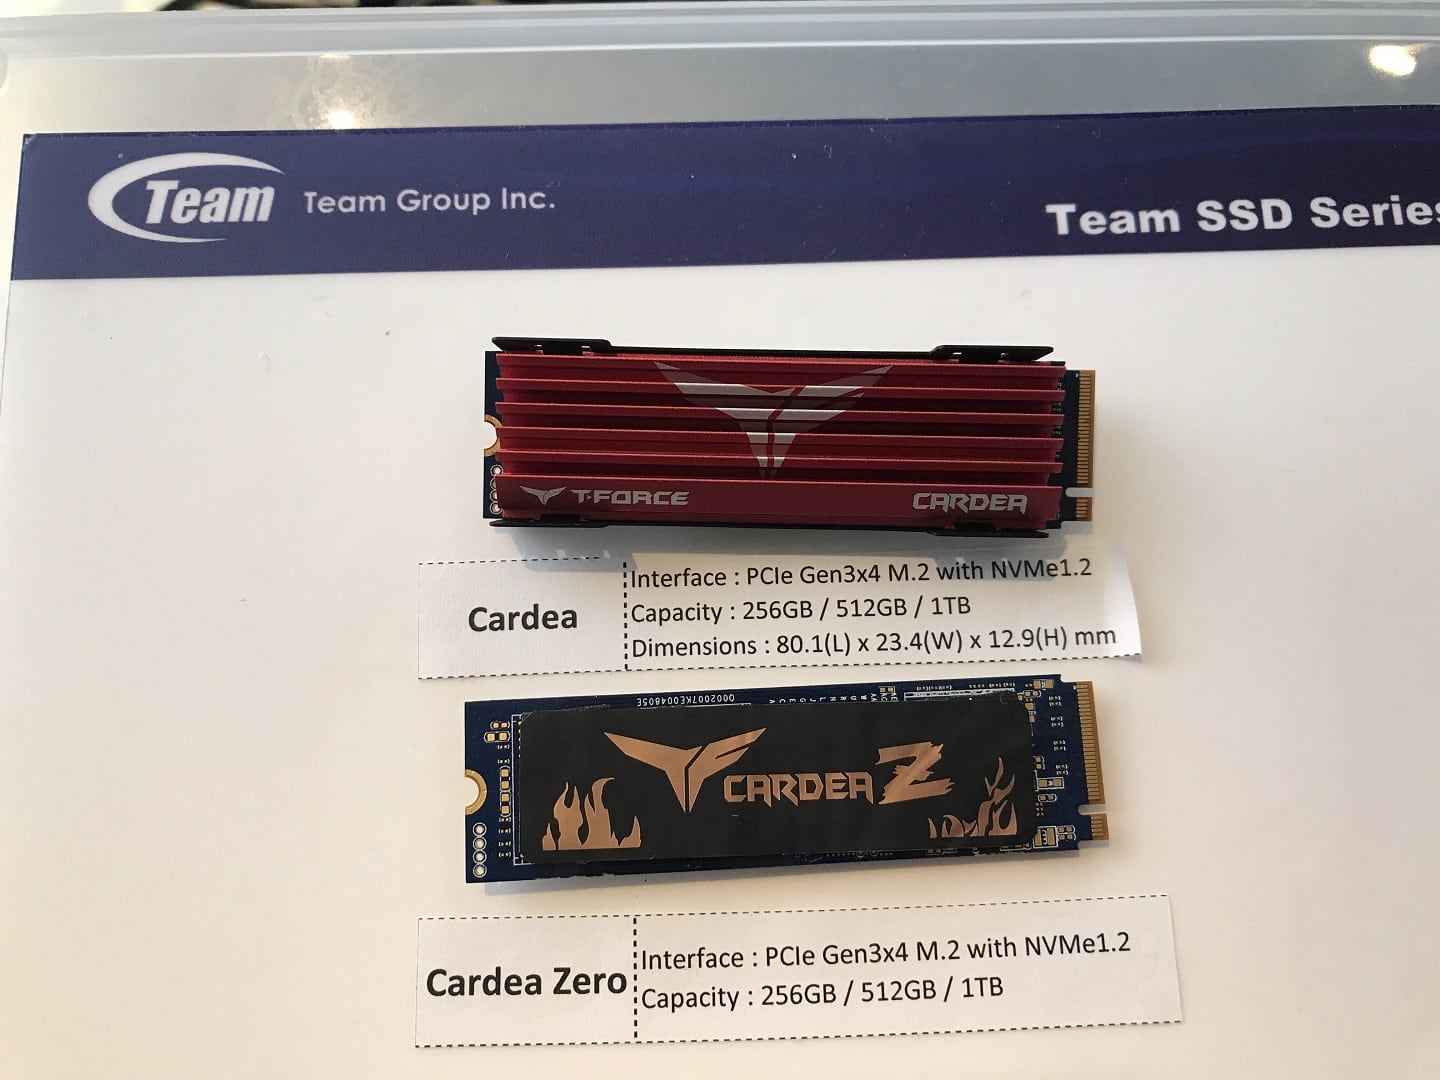 Cardea & Cardea Zero NVMe SSD